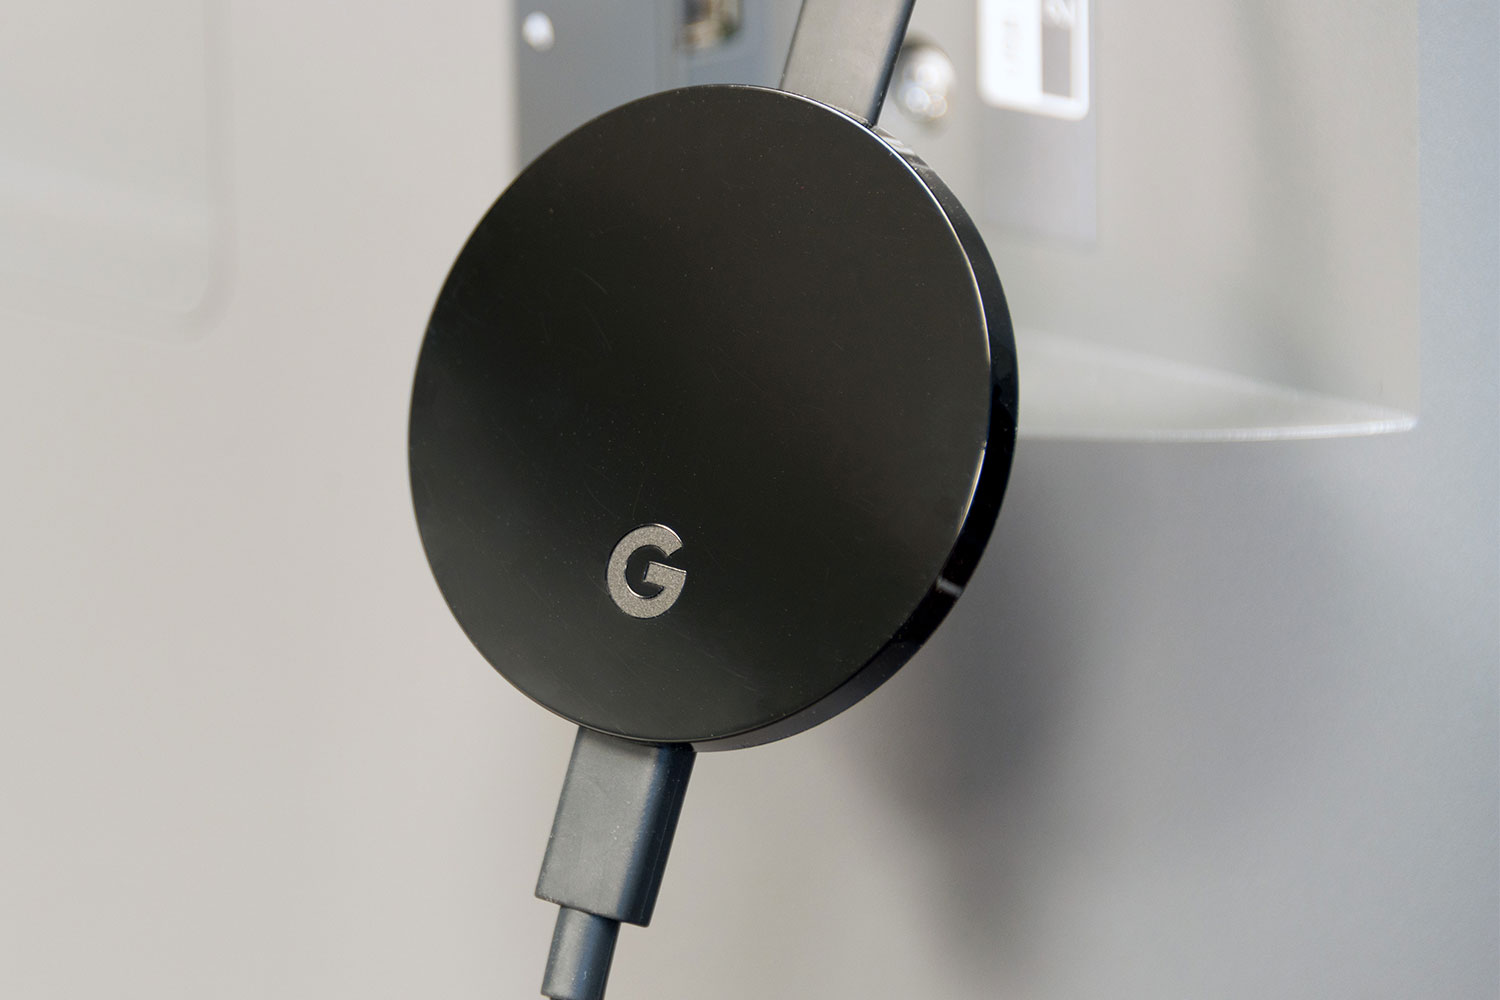 Google Chromecast Ultra Review: Still Going Strong | Digital